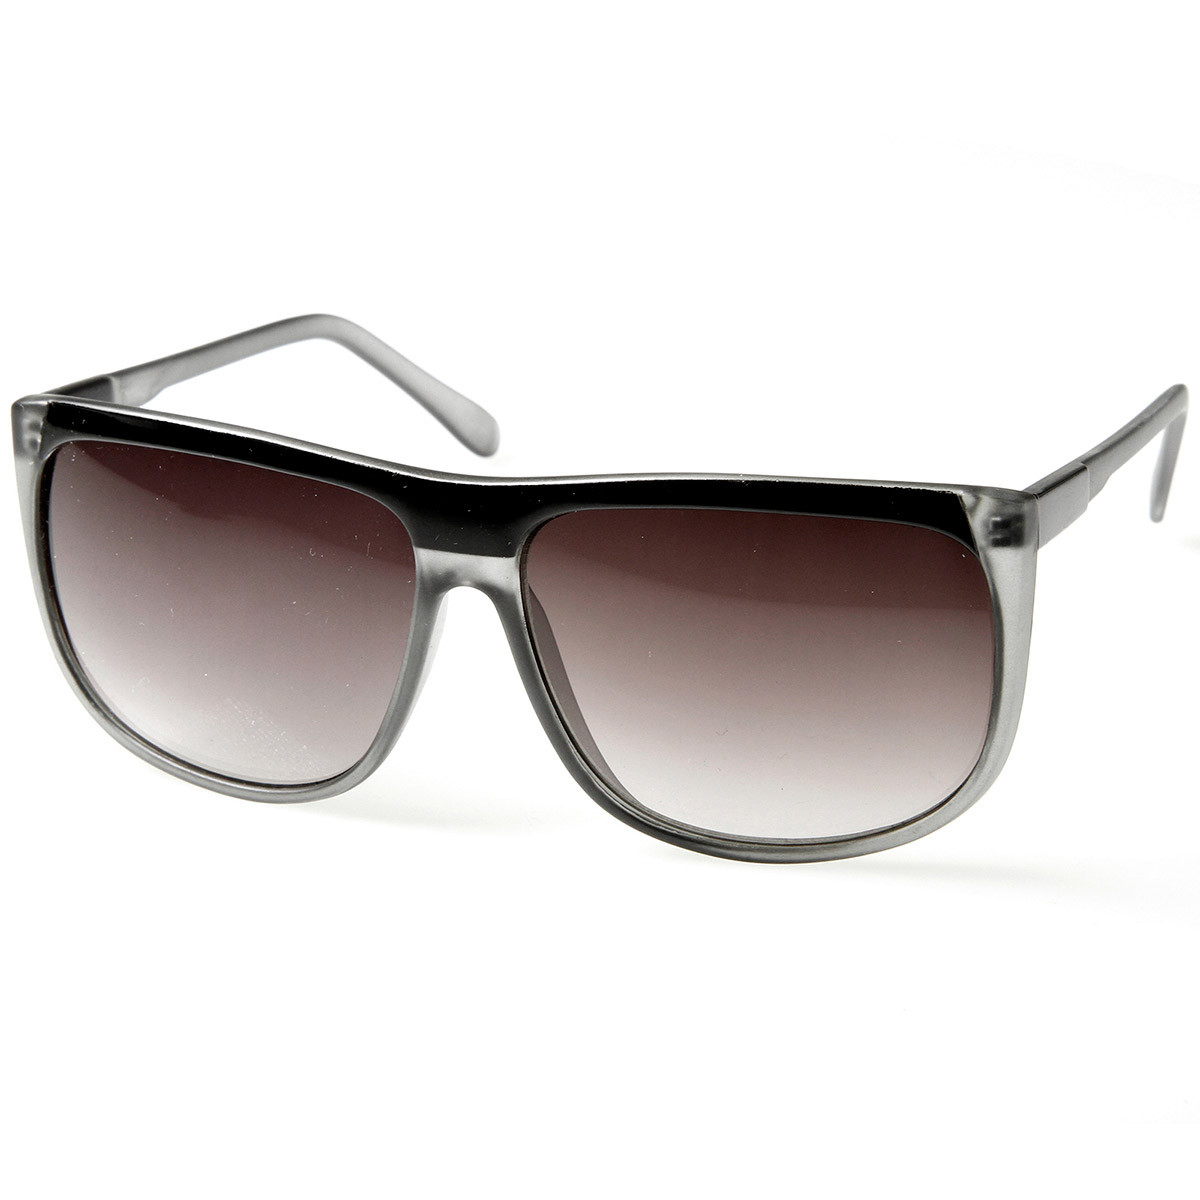 Retro Flat Top Plastic Two-Tone Fashion Aviator Sunglasses - Black